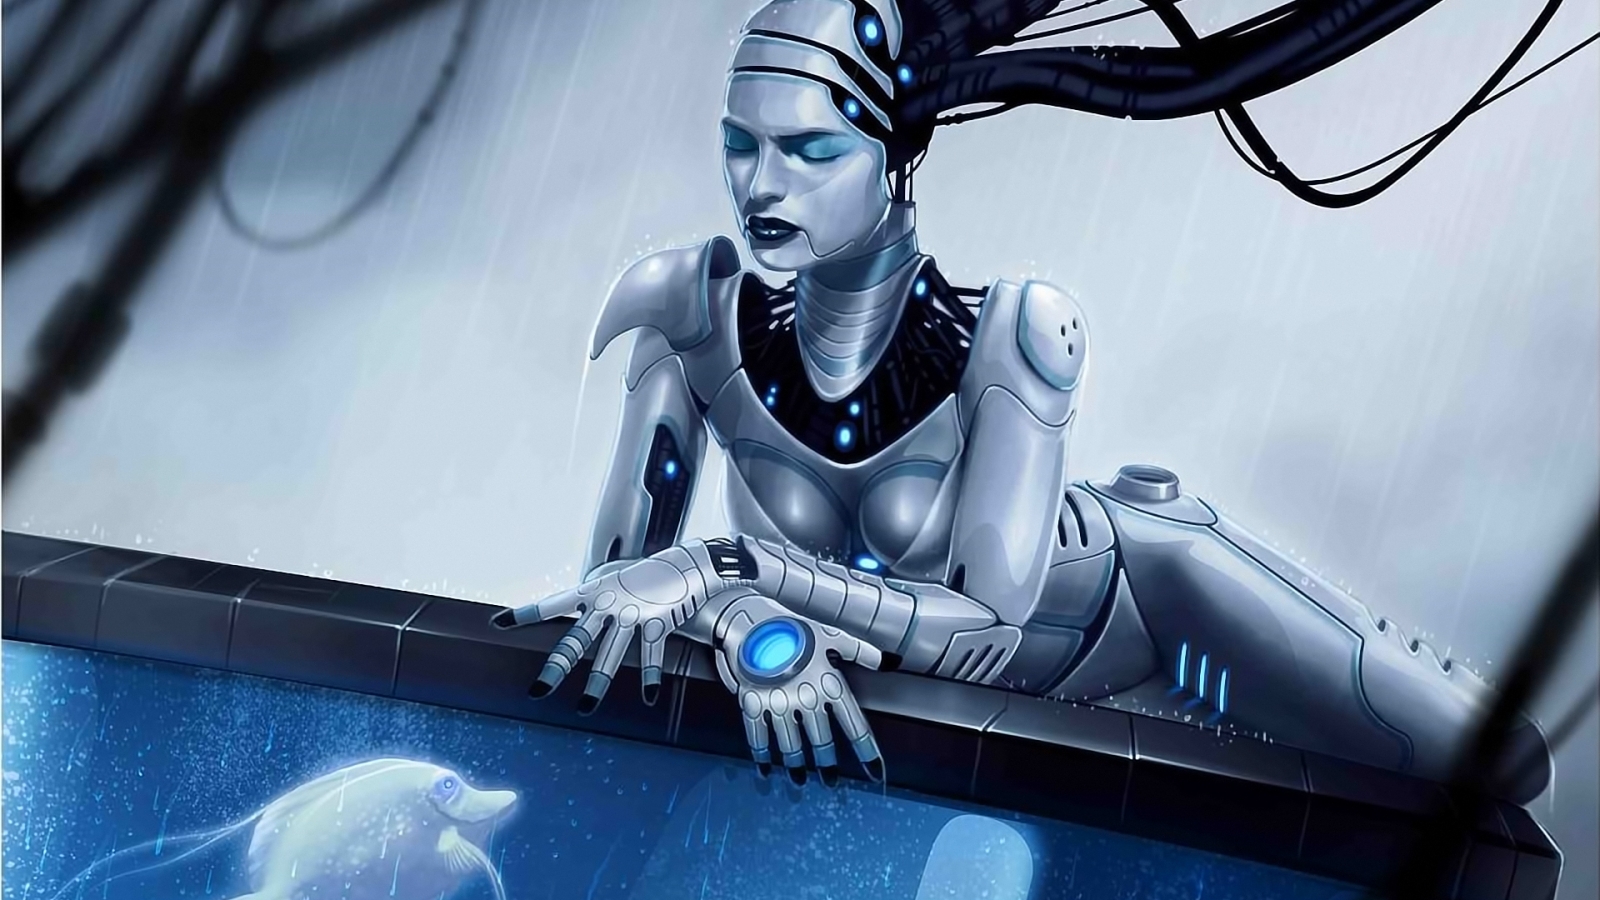 Fantasy Woman Robot for 1600 x 900 HDTV resolution